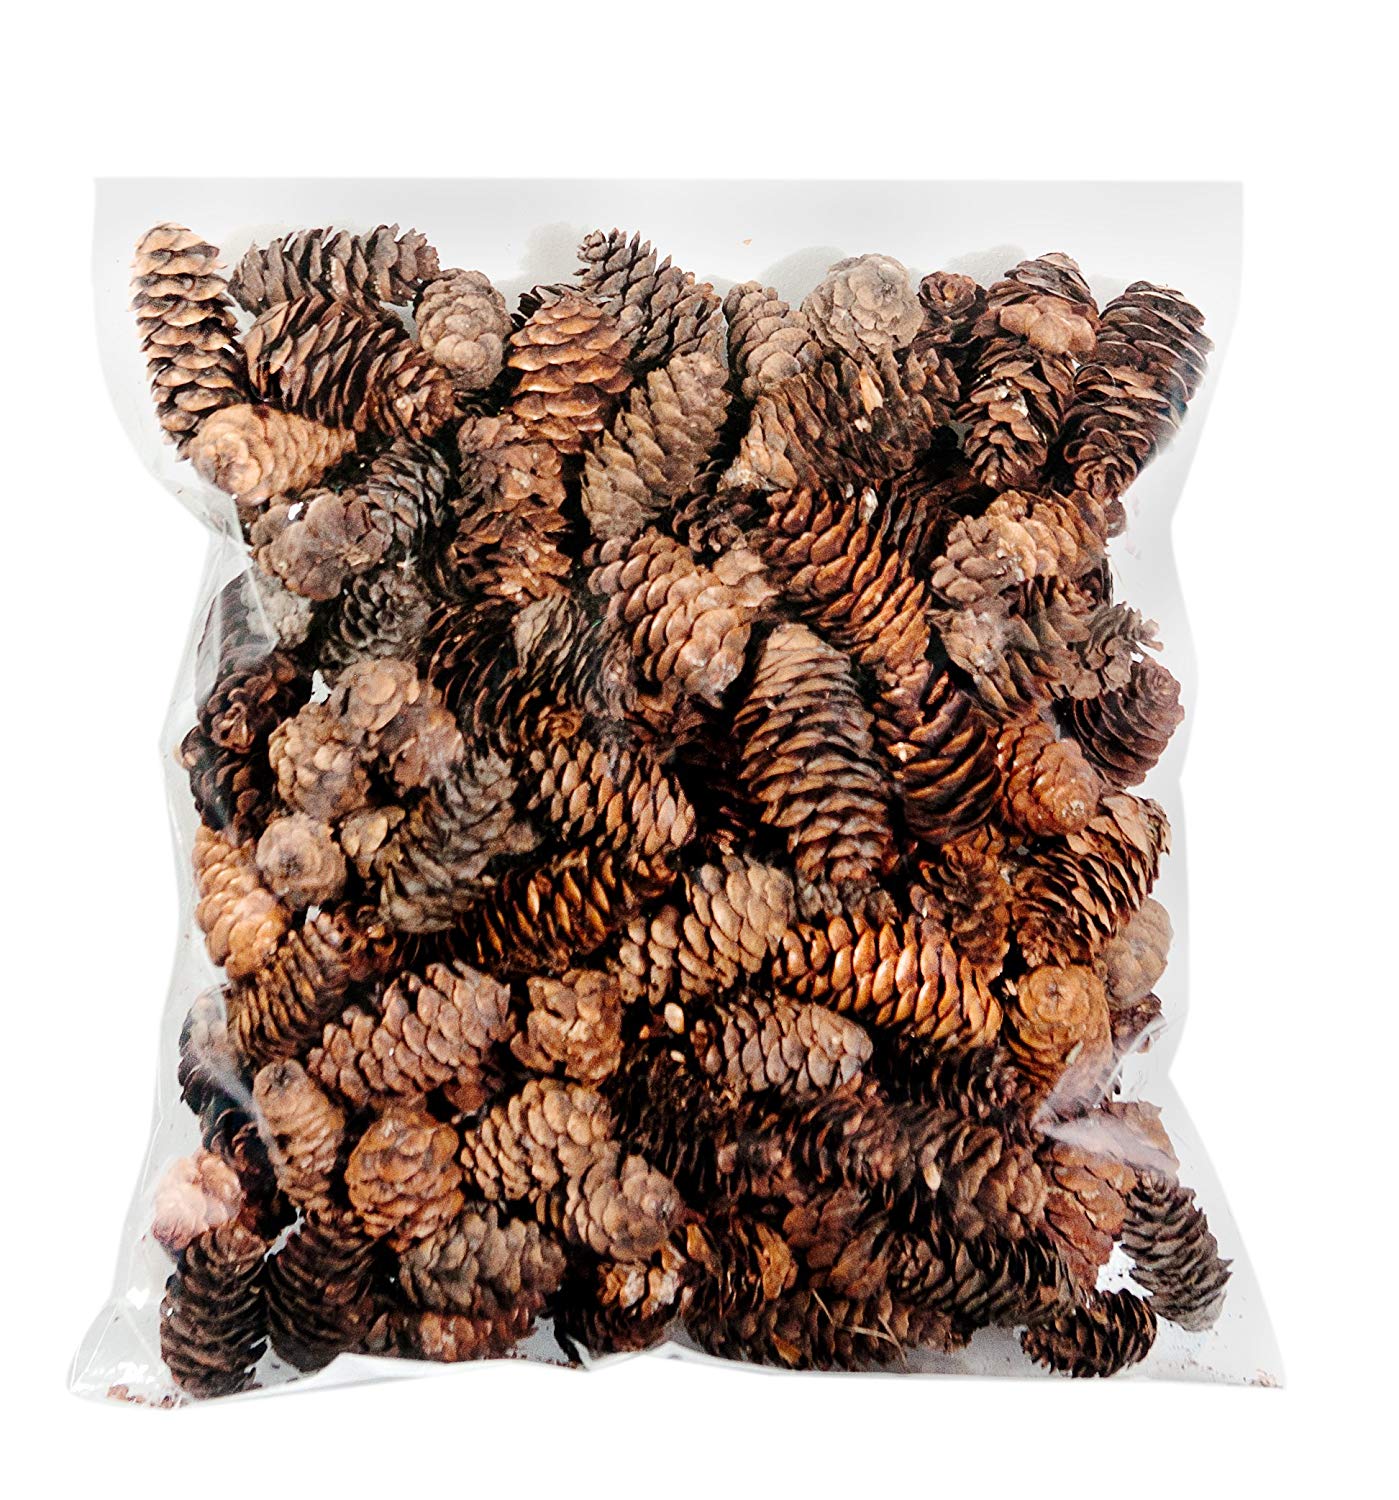 Amazon.com : SuperMoss (24511) Black Spruce Pine Cones, 8-Ounce ...